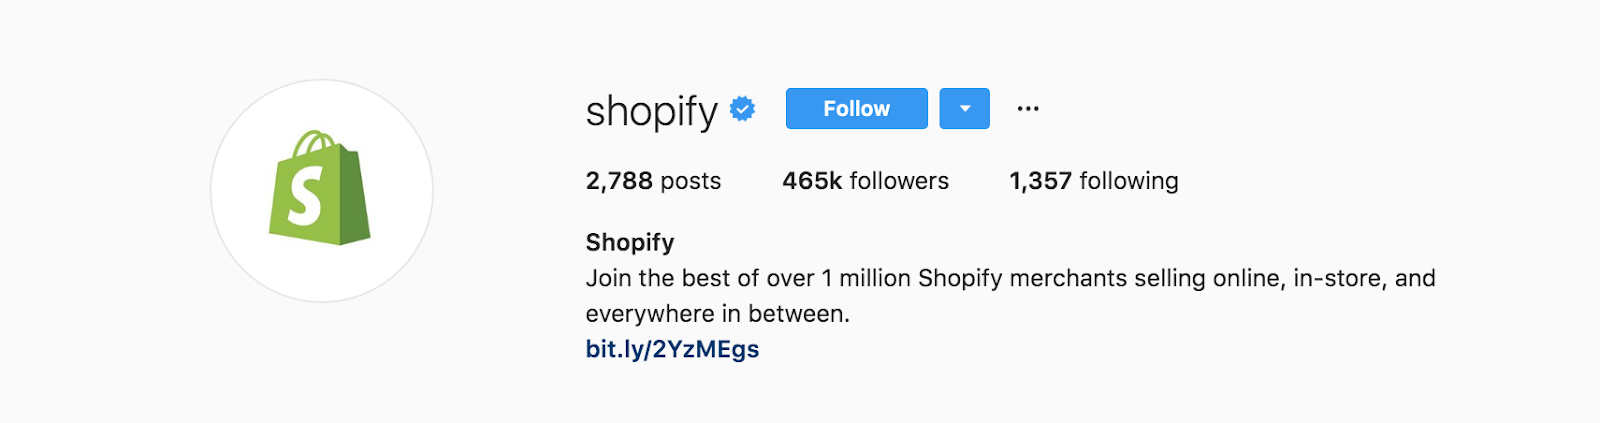 Instagram Bio Ideas: 9 Steps to Writing the Perfect Bio - Shopify